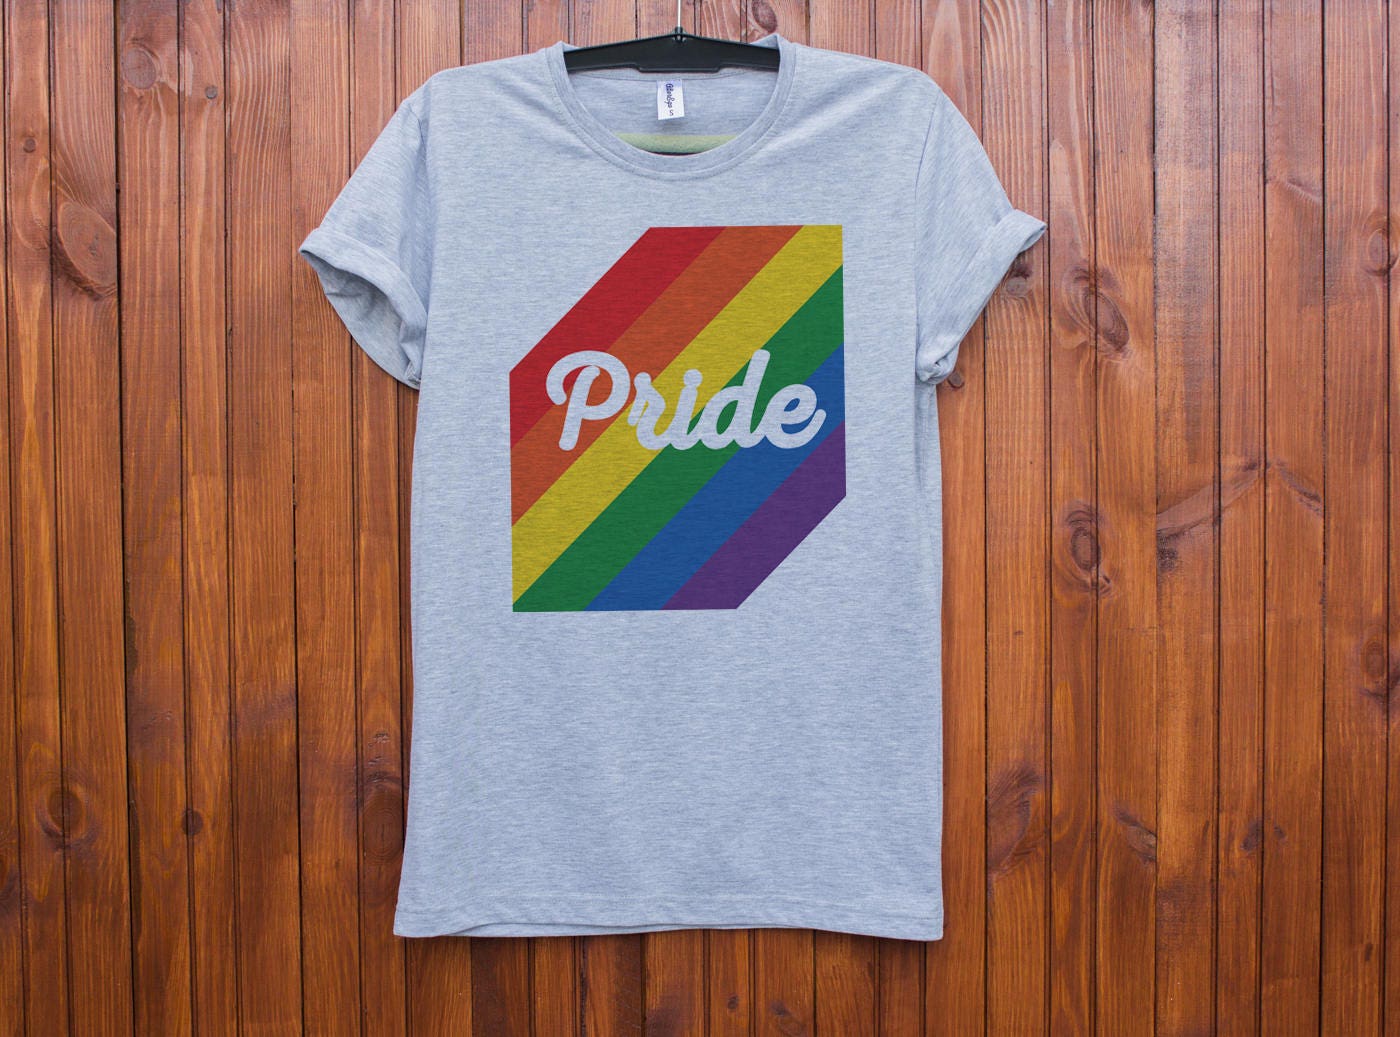 where to buy gay pride apparel